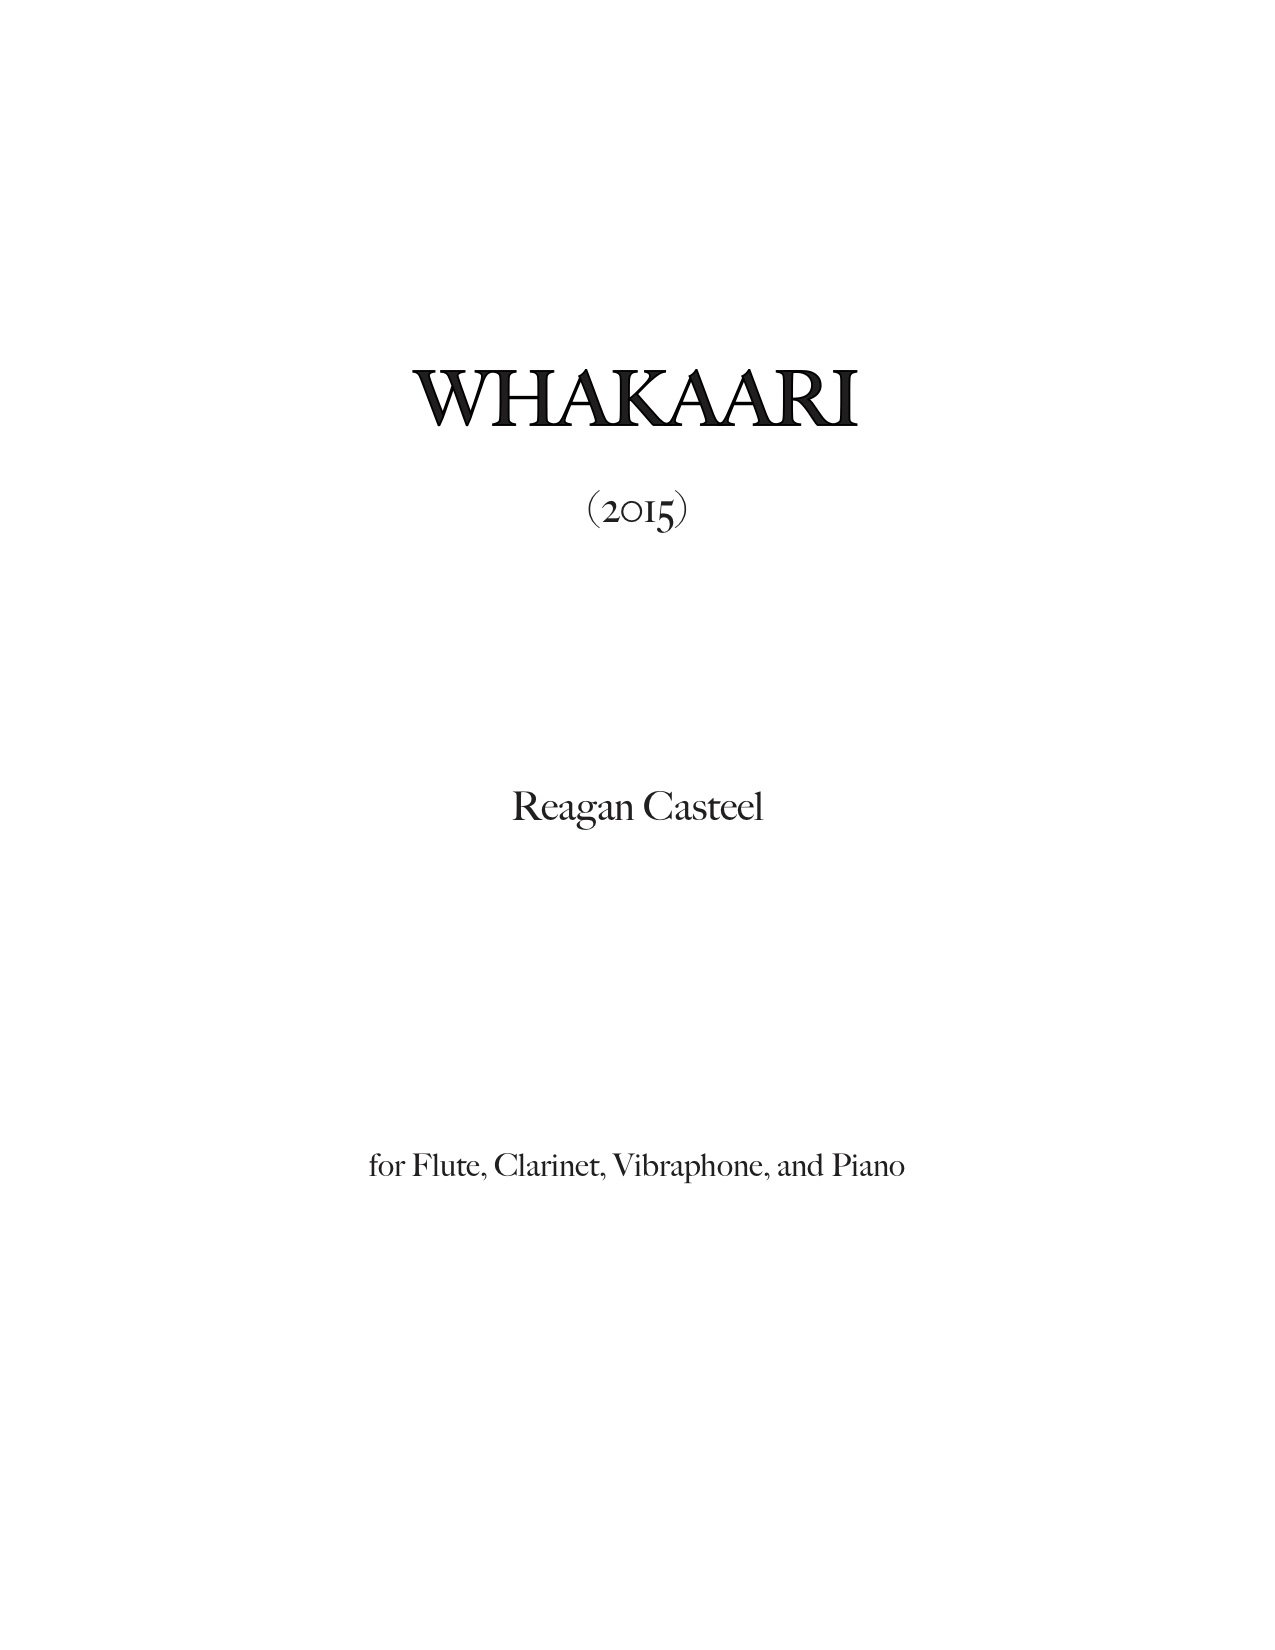 Whakaari Full Score and Parts copy (dragged).jpg